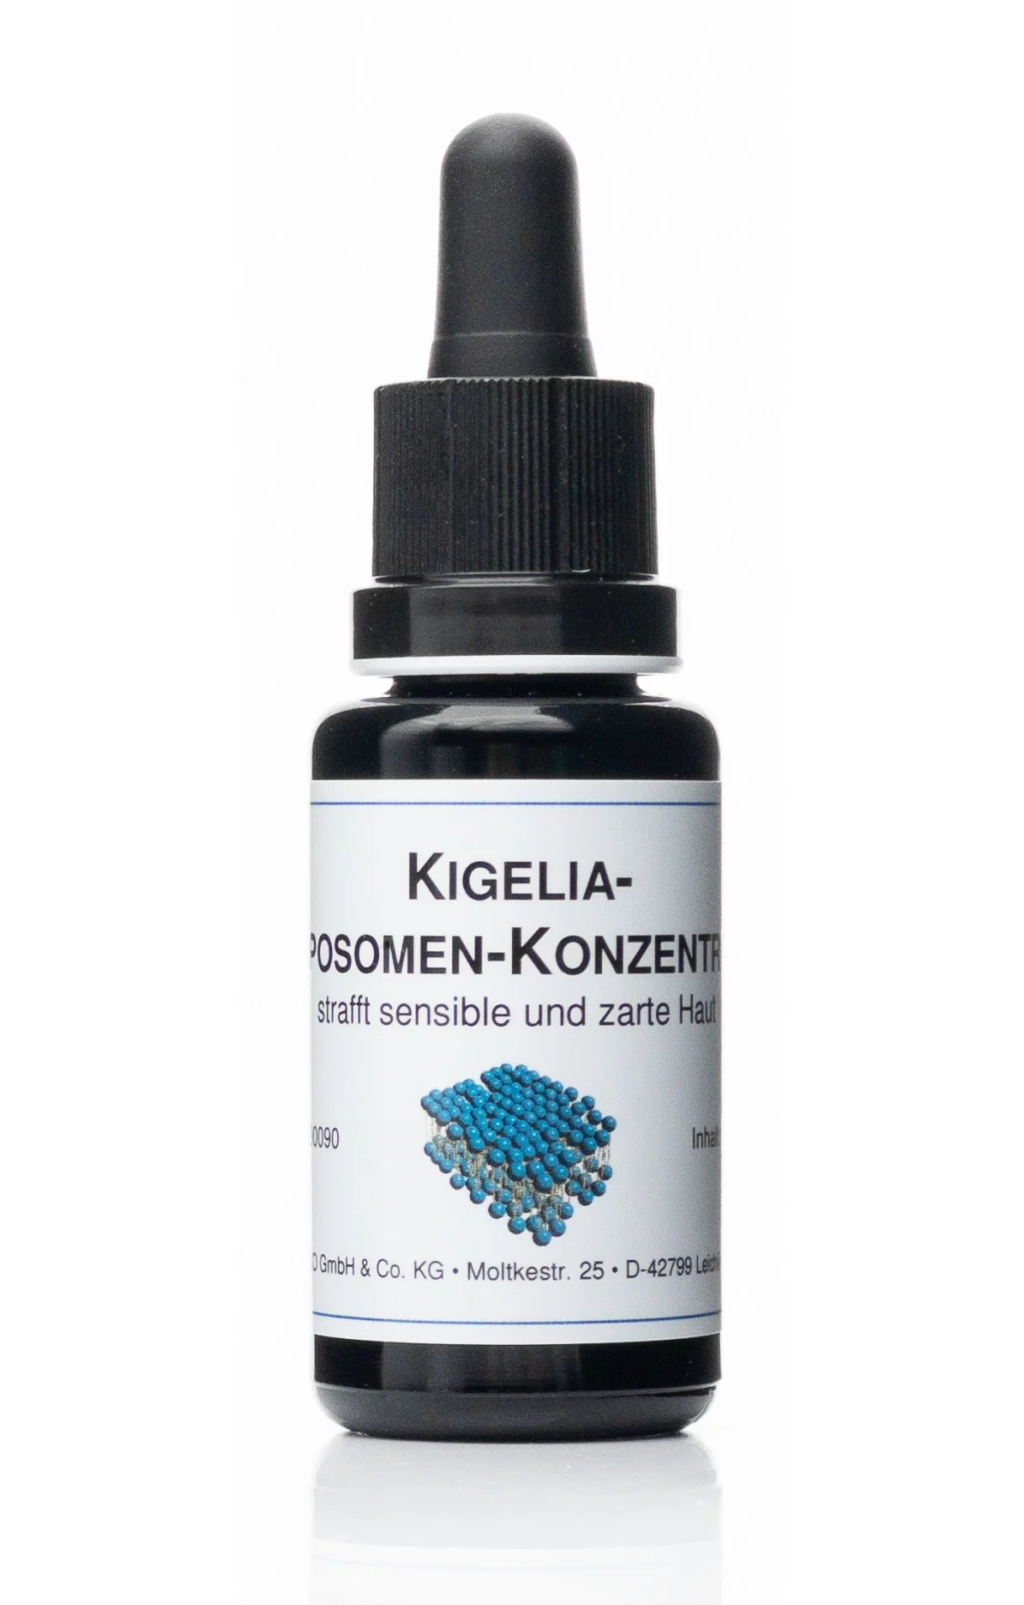 Kigelia-Liposomen-Konzentrat 